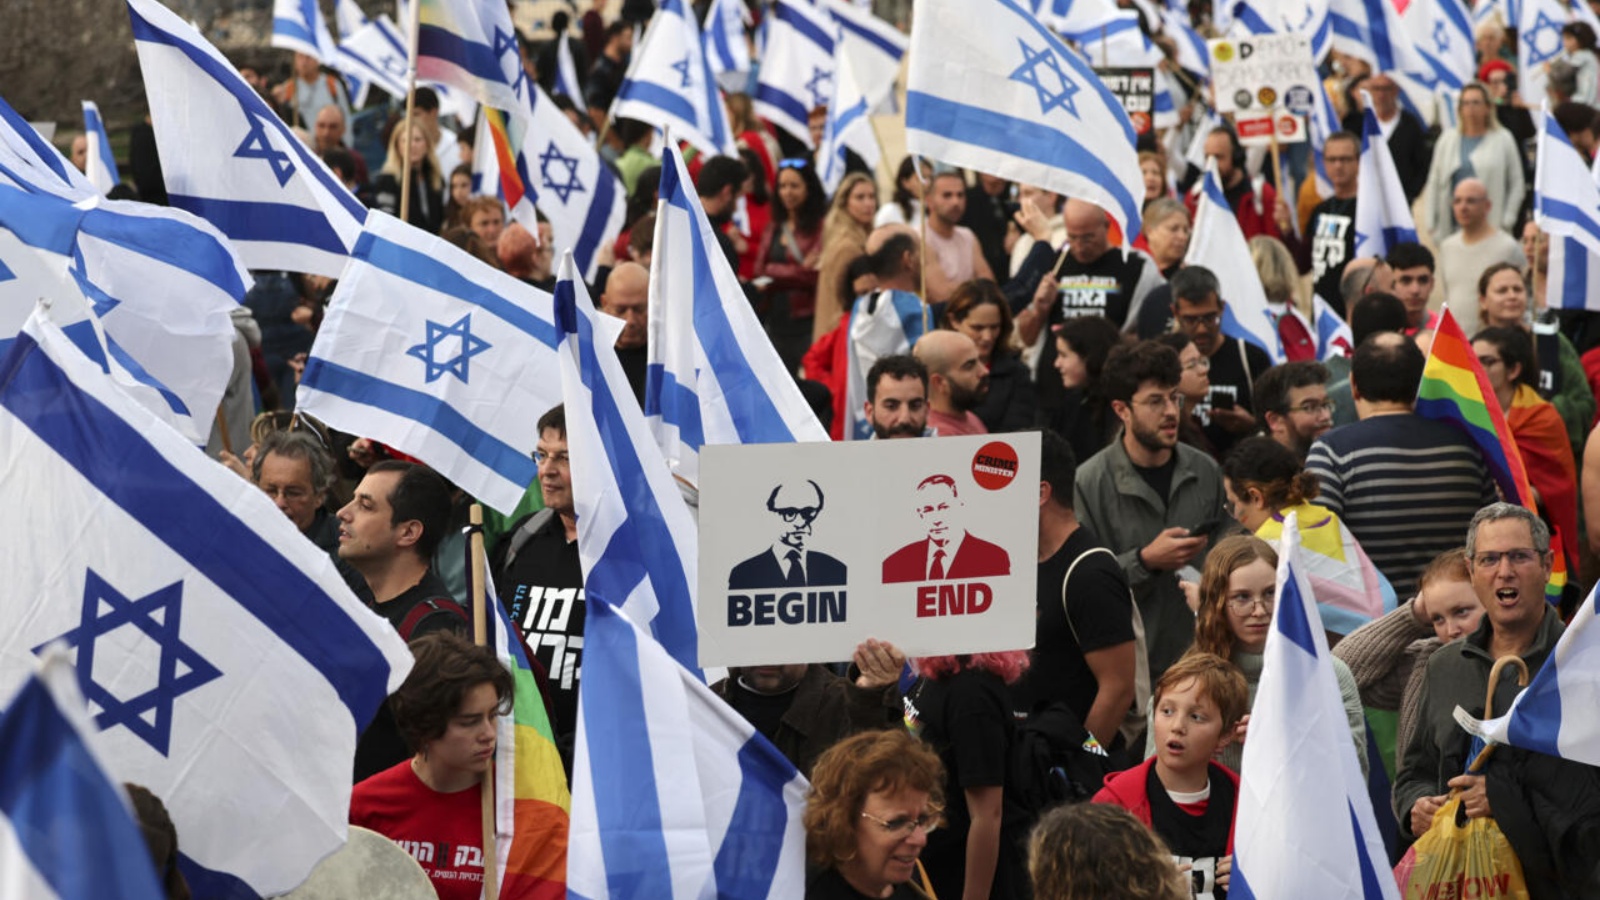 إسرائيليون يتظاهرون في تل أبيب ضد مشروع حكومي لتعديل النظام القضائي